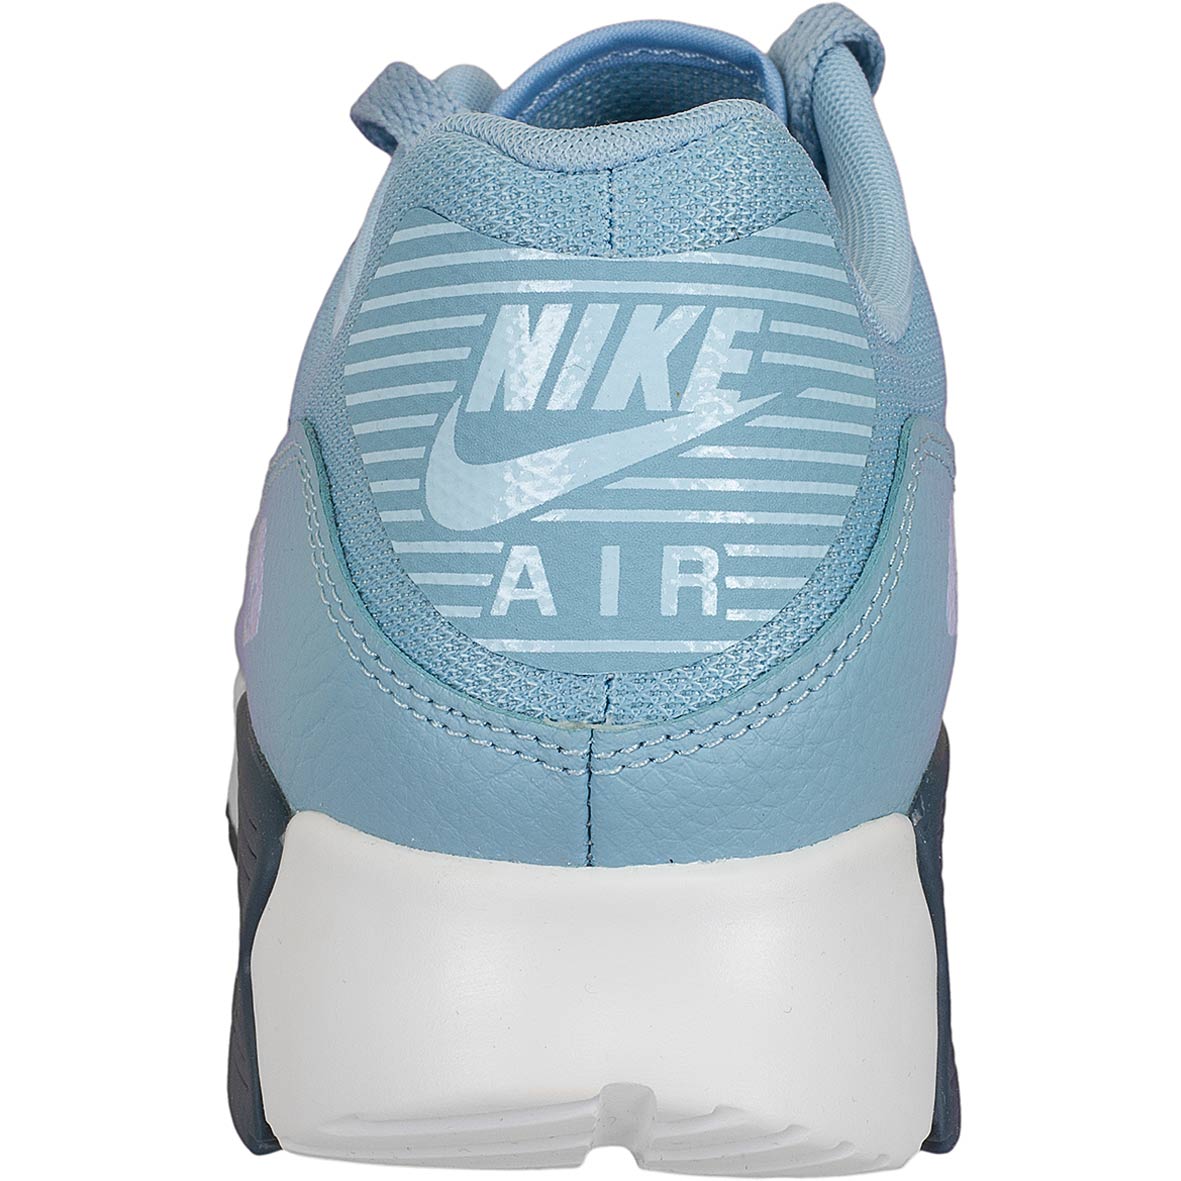 ☆ Nike Damen Sneaker Air Max 90 Ultra 2.0 blau - hier bestellen!